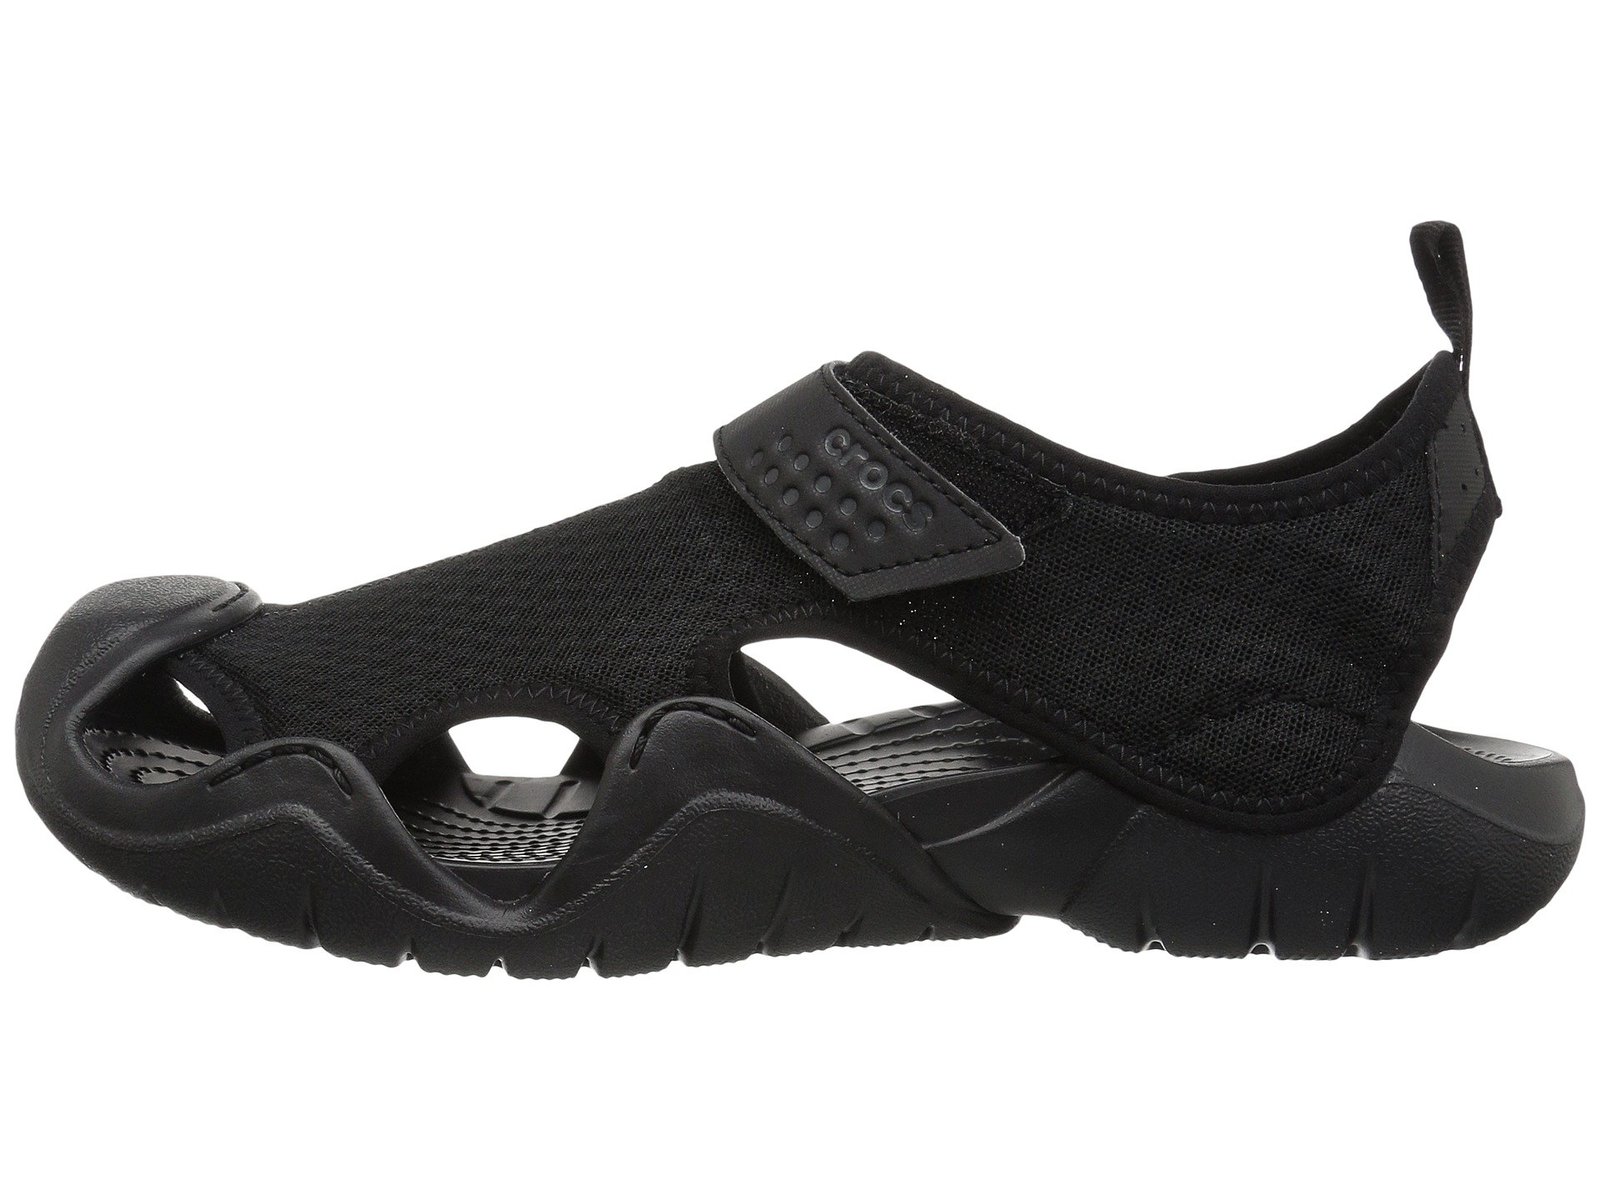 Crocs Men's Swiftwater Water Sandals Waterproof Shoes - Black/Black